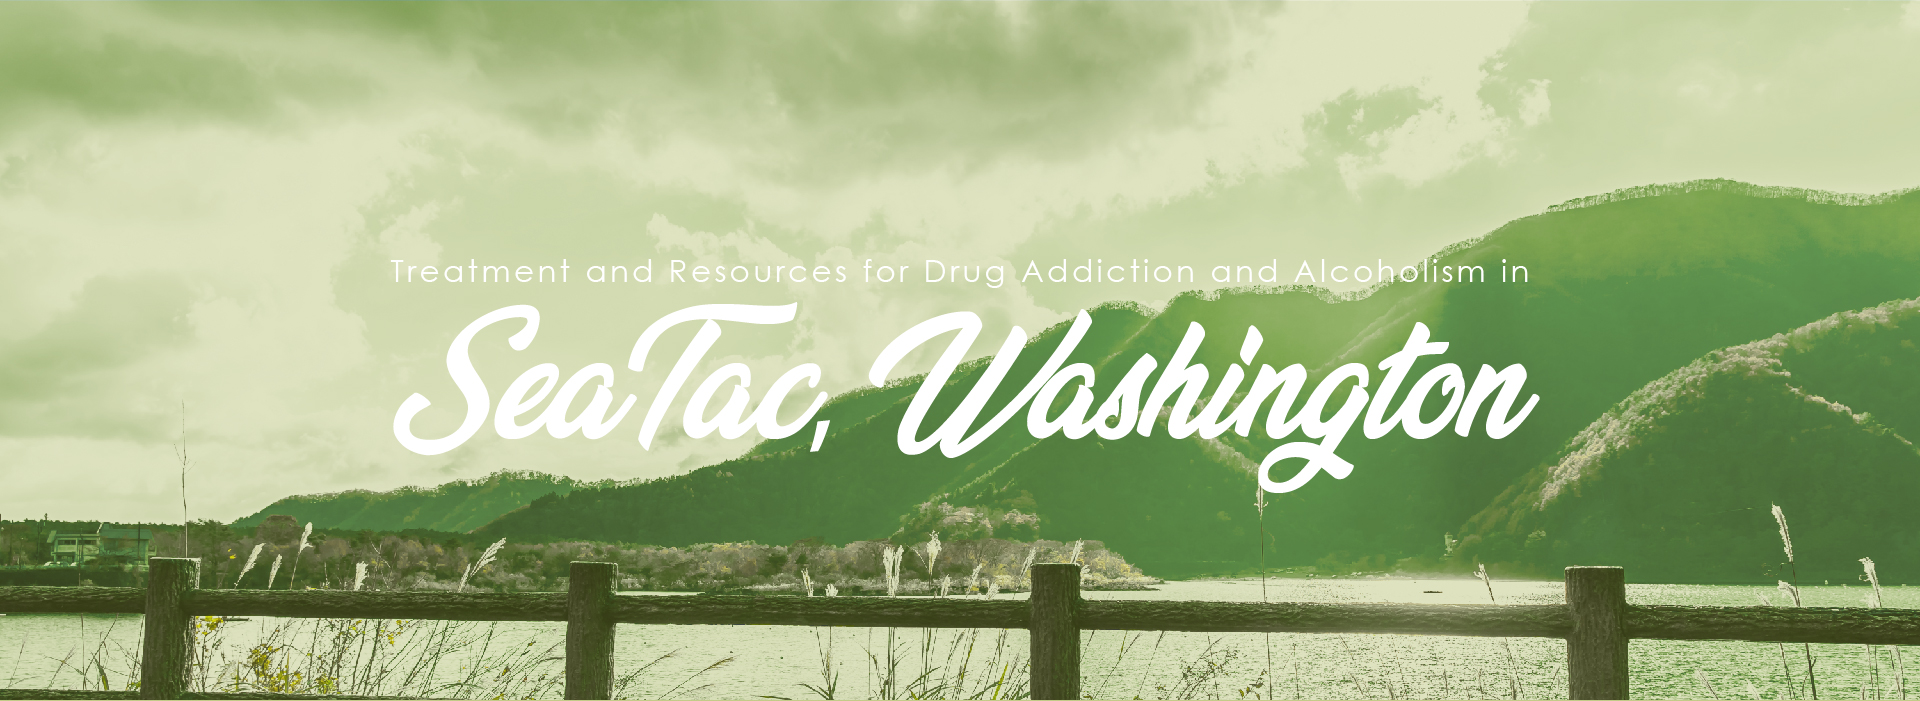 SeaTac, Washington addiction resources